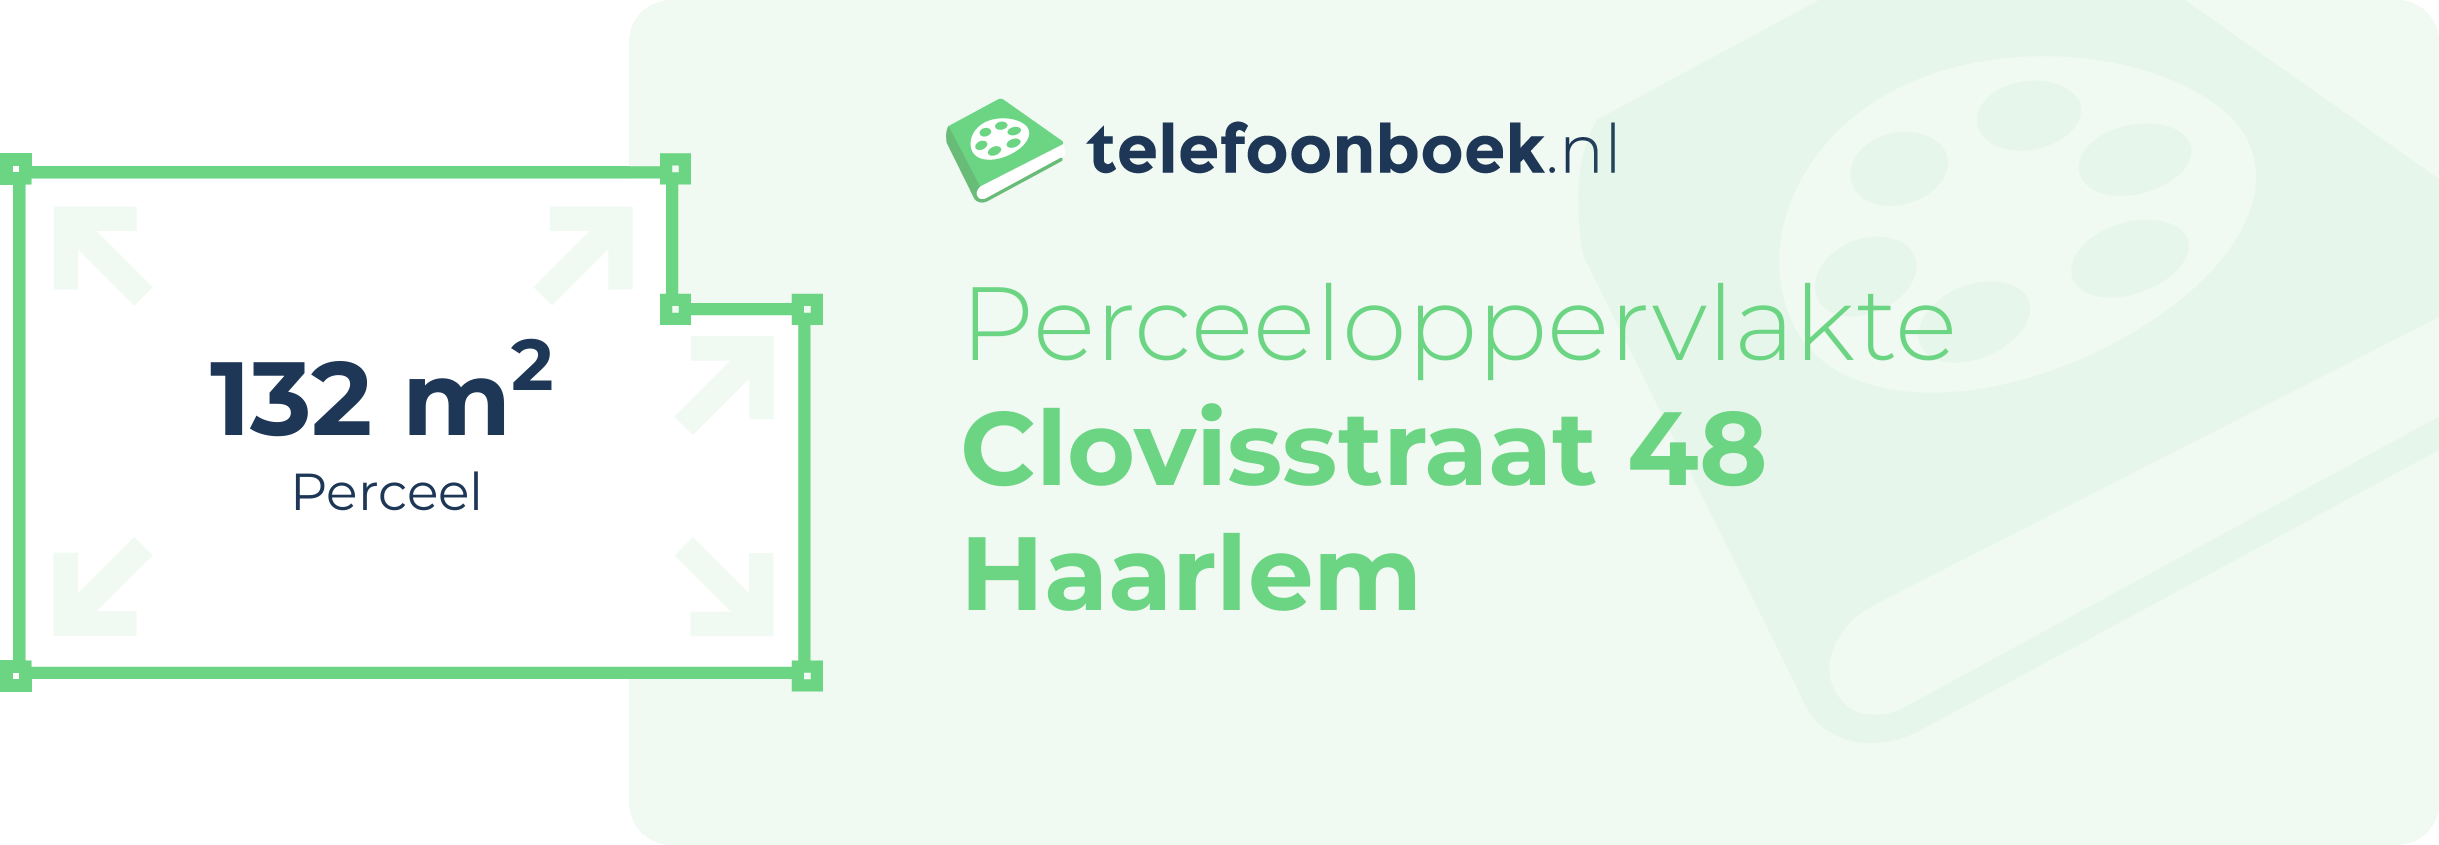 Perceeloppervlakte Clovisstraat 48 Haarlem